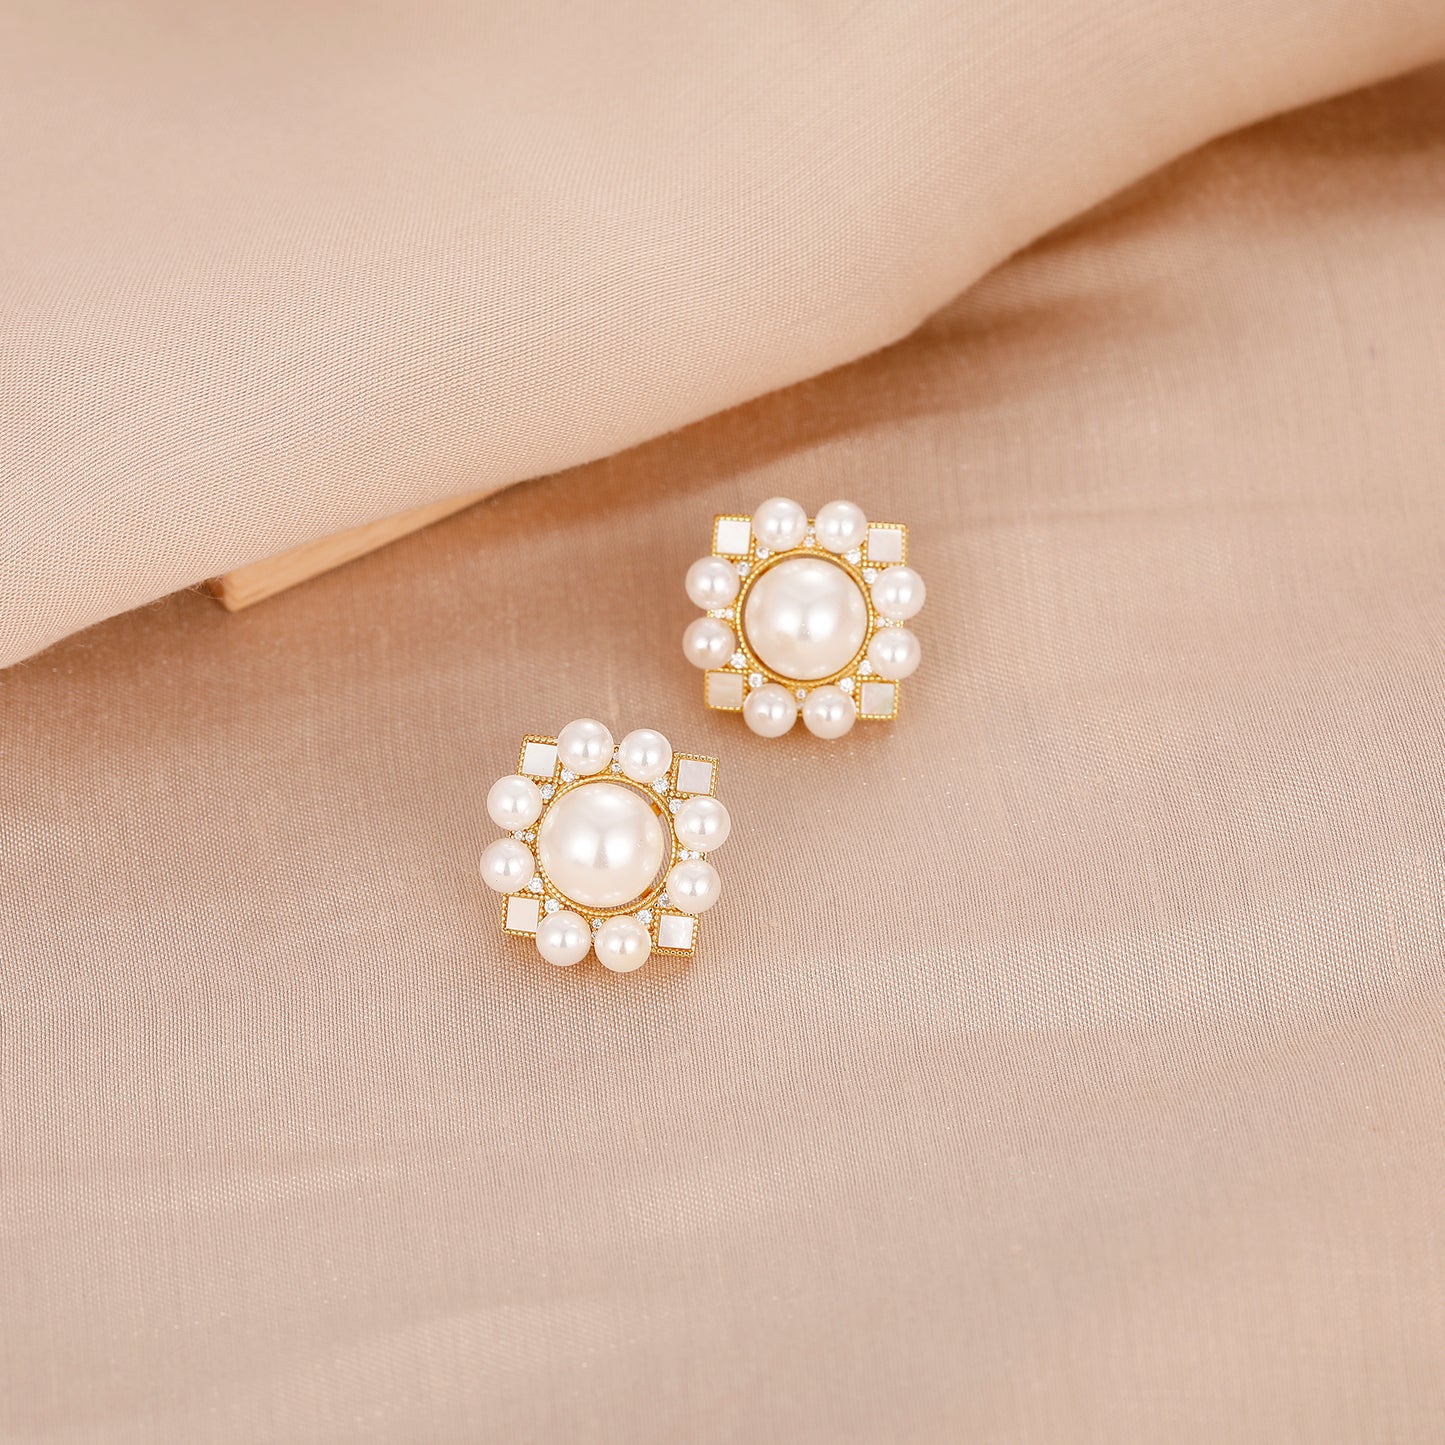 Natural Shell Pearl 10mm Studs Earrings, Sterling Silver Earrings, Beach Jewelry, Simulated Diamond Earrings For Women